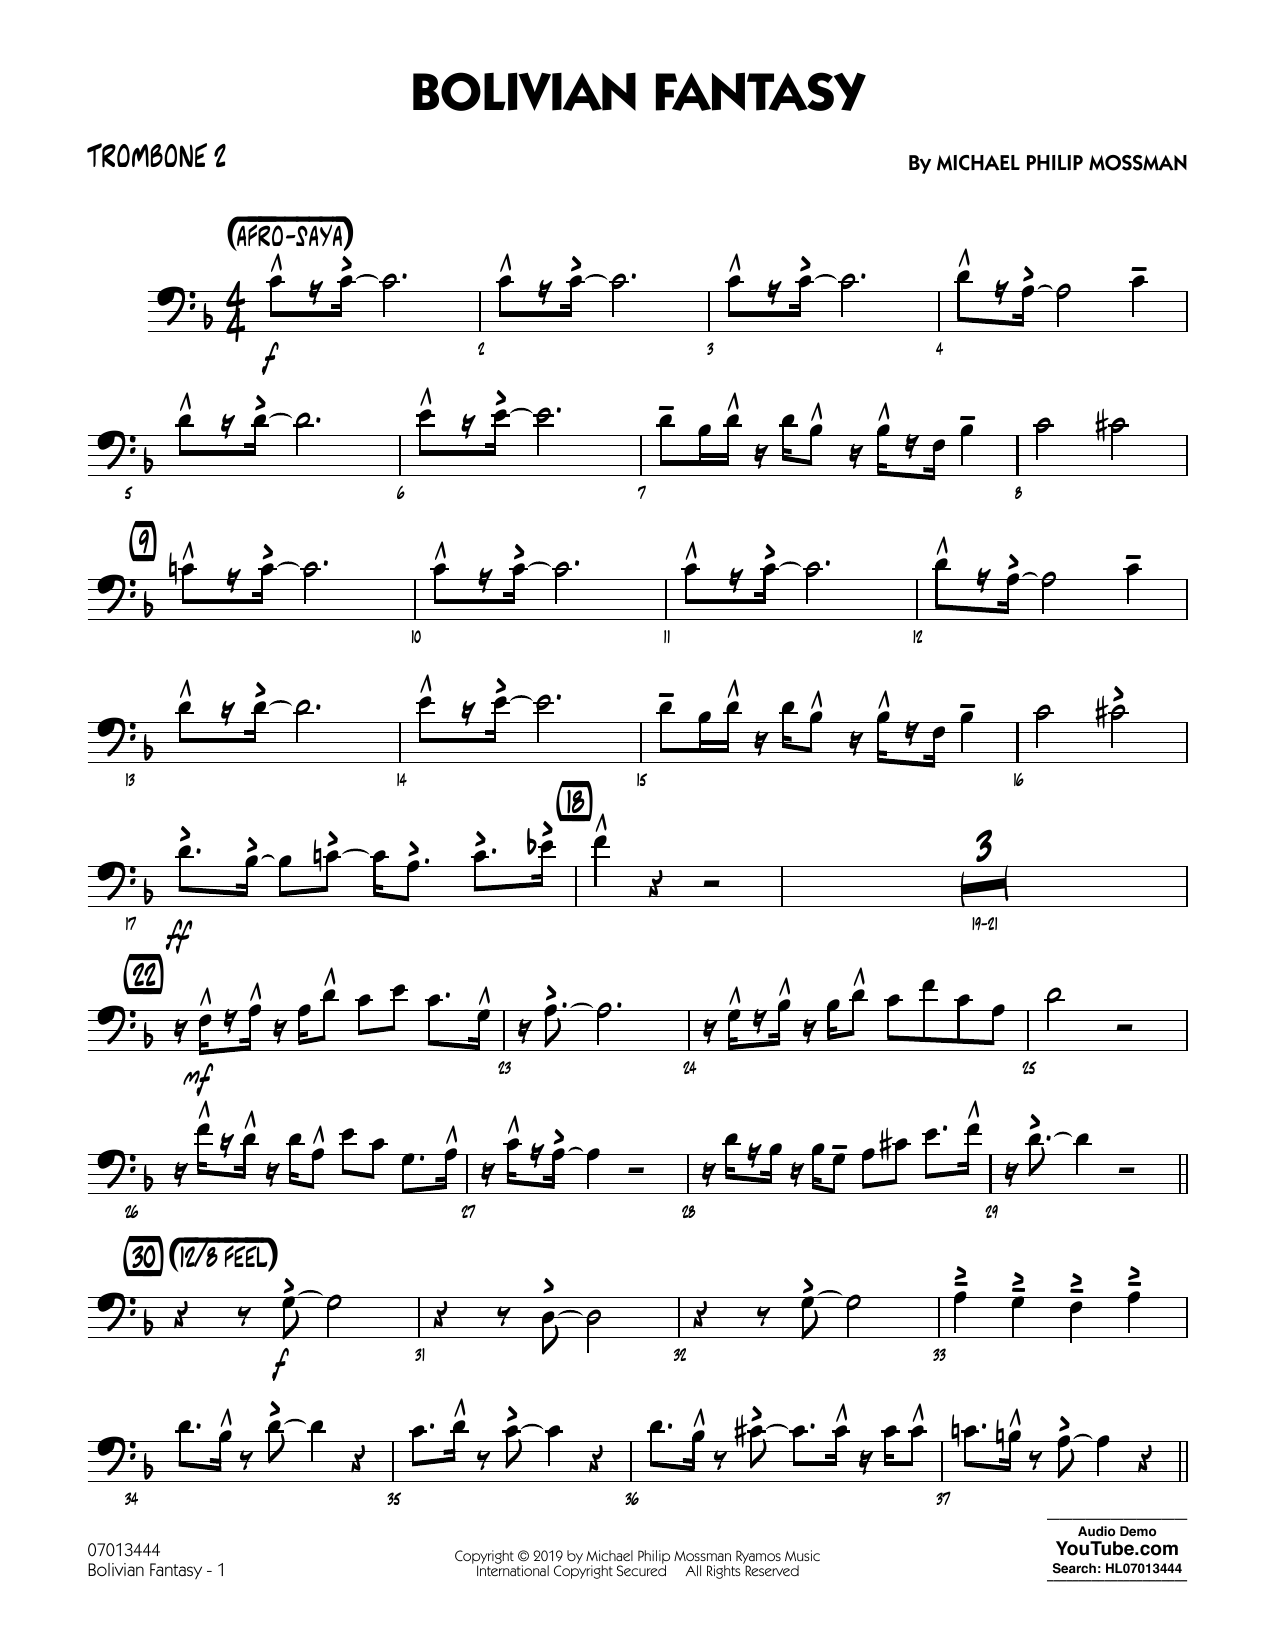 Michael Philip Mossman Bolivian Fantasy - Trombone 2 Sheet Music Notes & Chords for Jazz Ensemble - Download or Print PDF